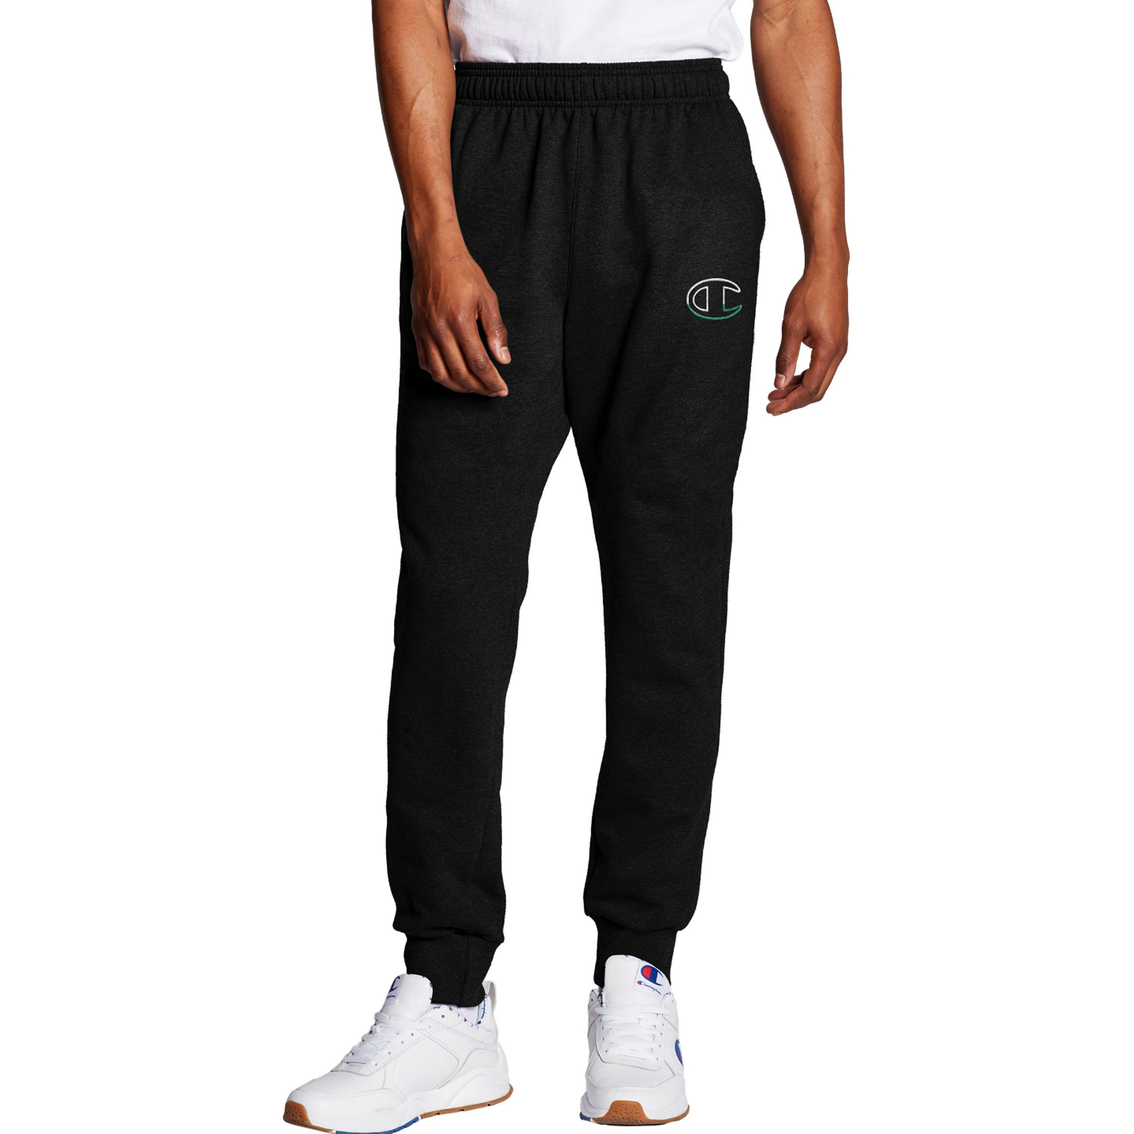 Champion Sports Powerblend Jogger Pants | Pants | Clothing ...